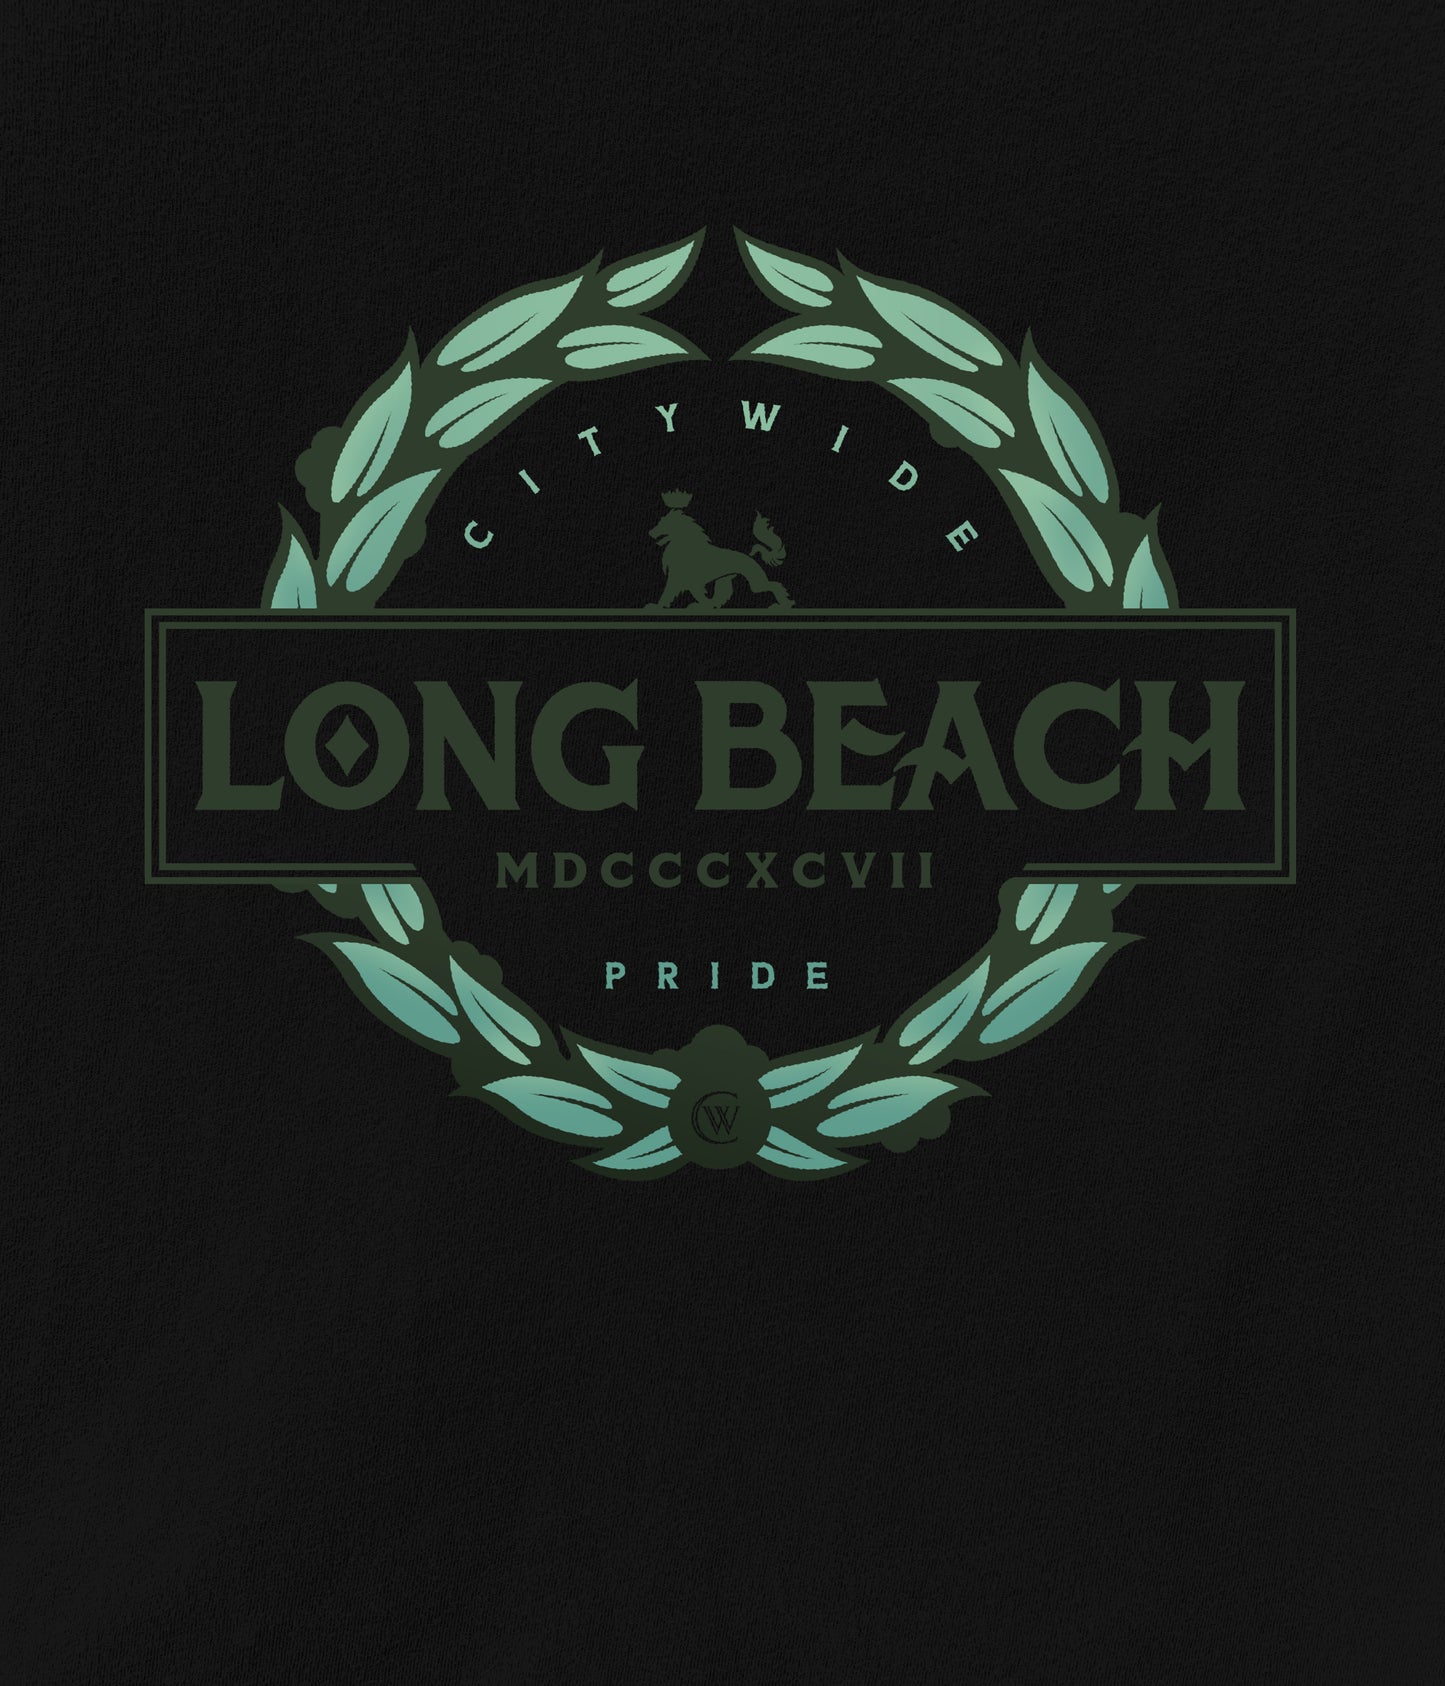 Long Beach The Pride Crewneck Sweatshirt